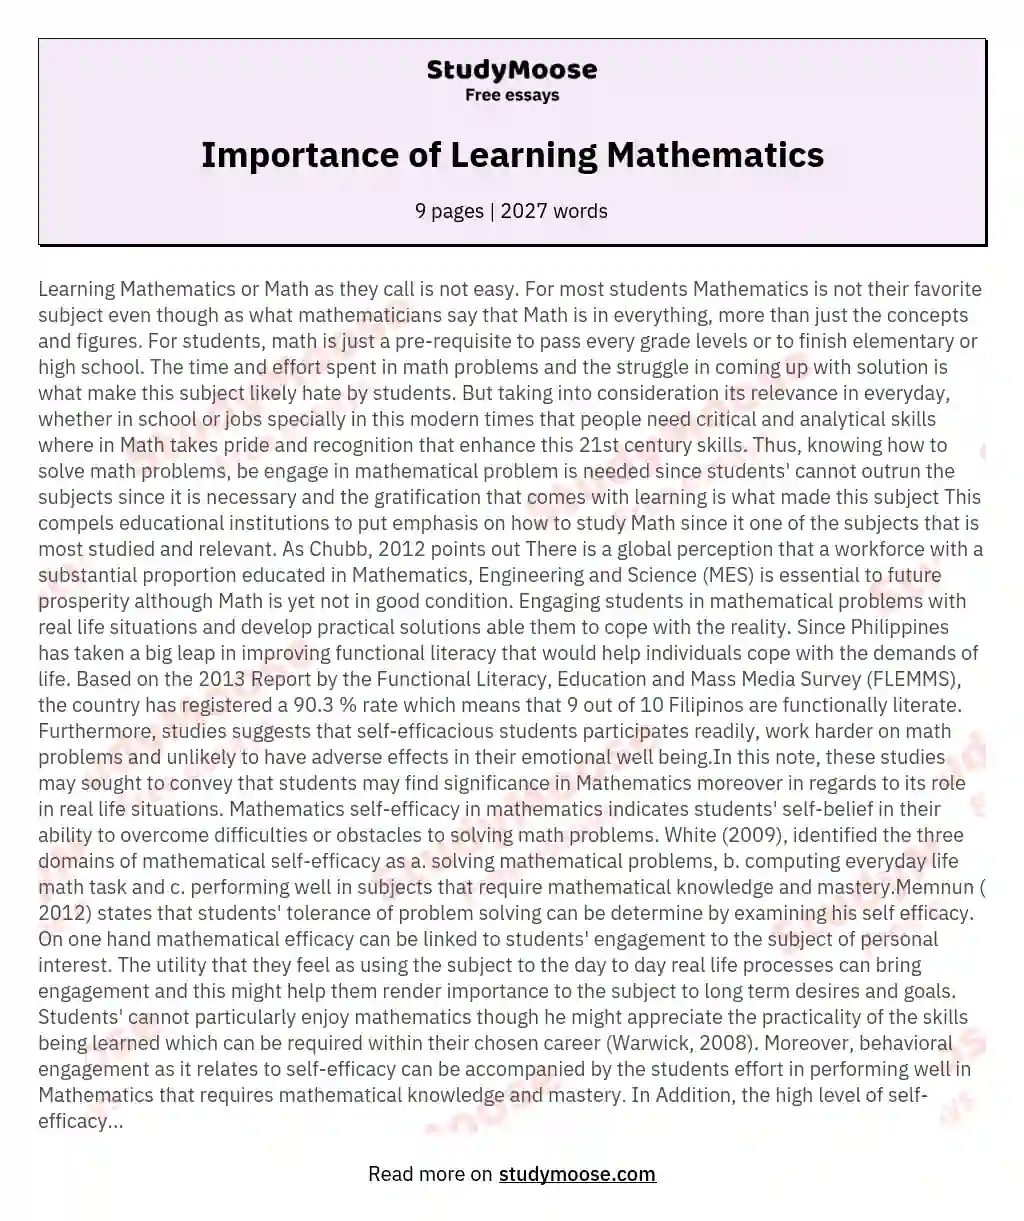 Importance of Learning Mathematics essay